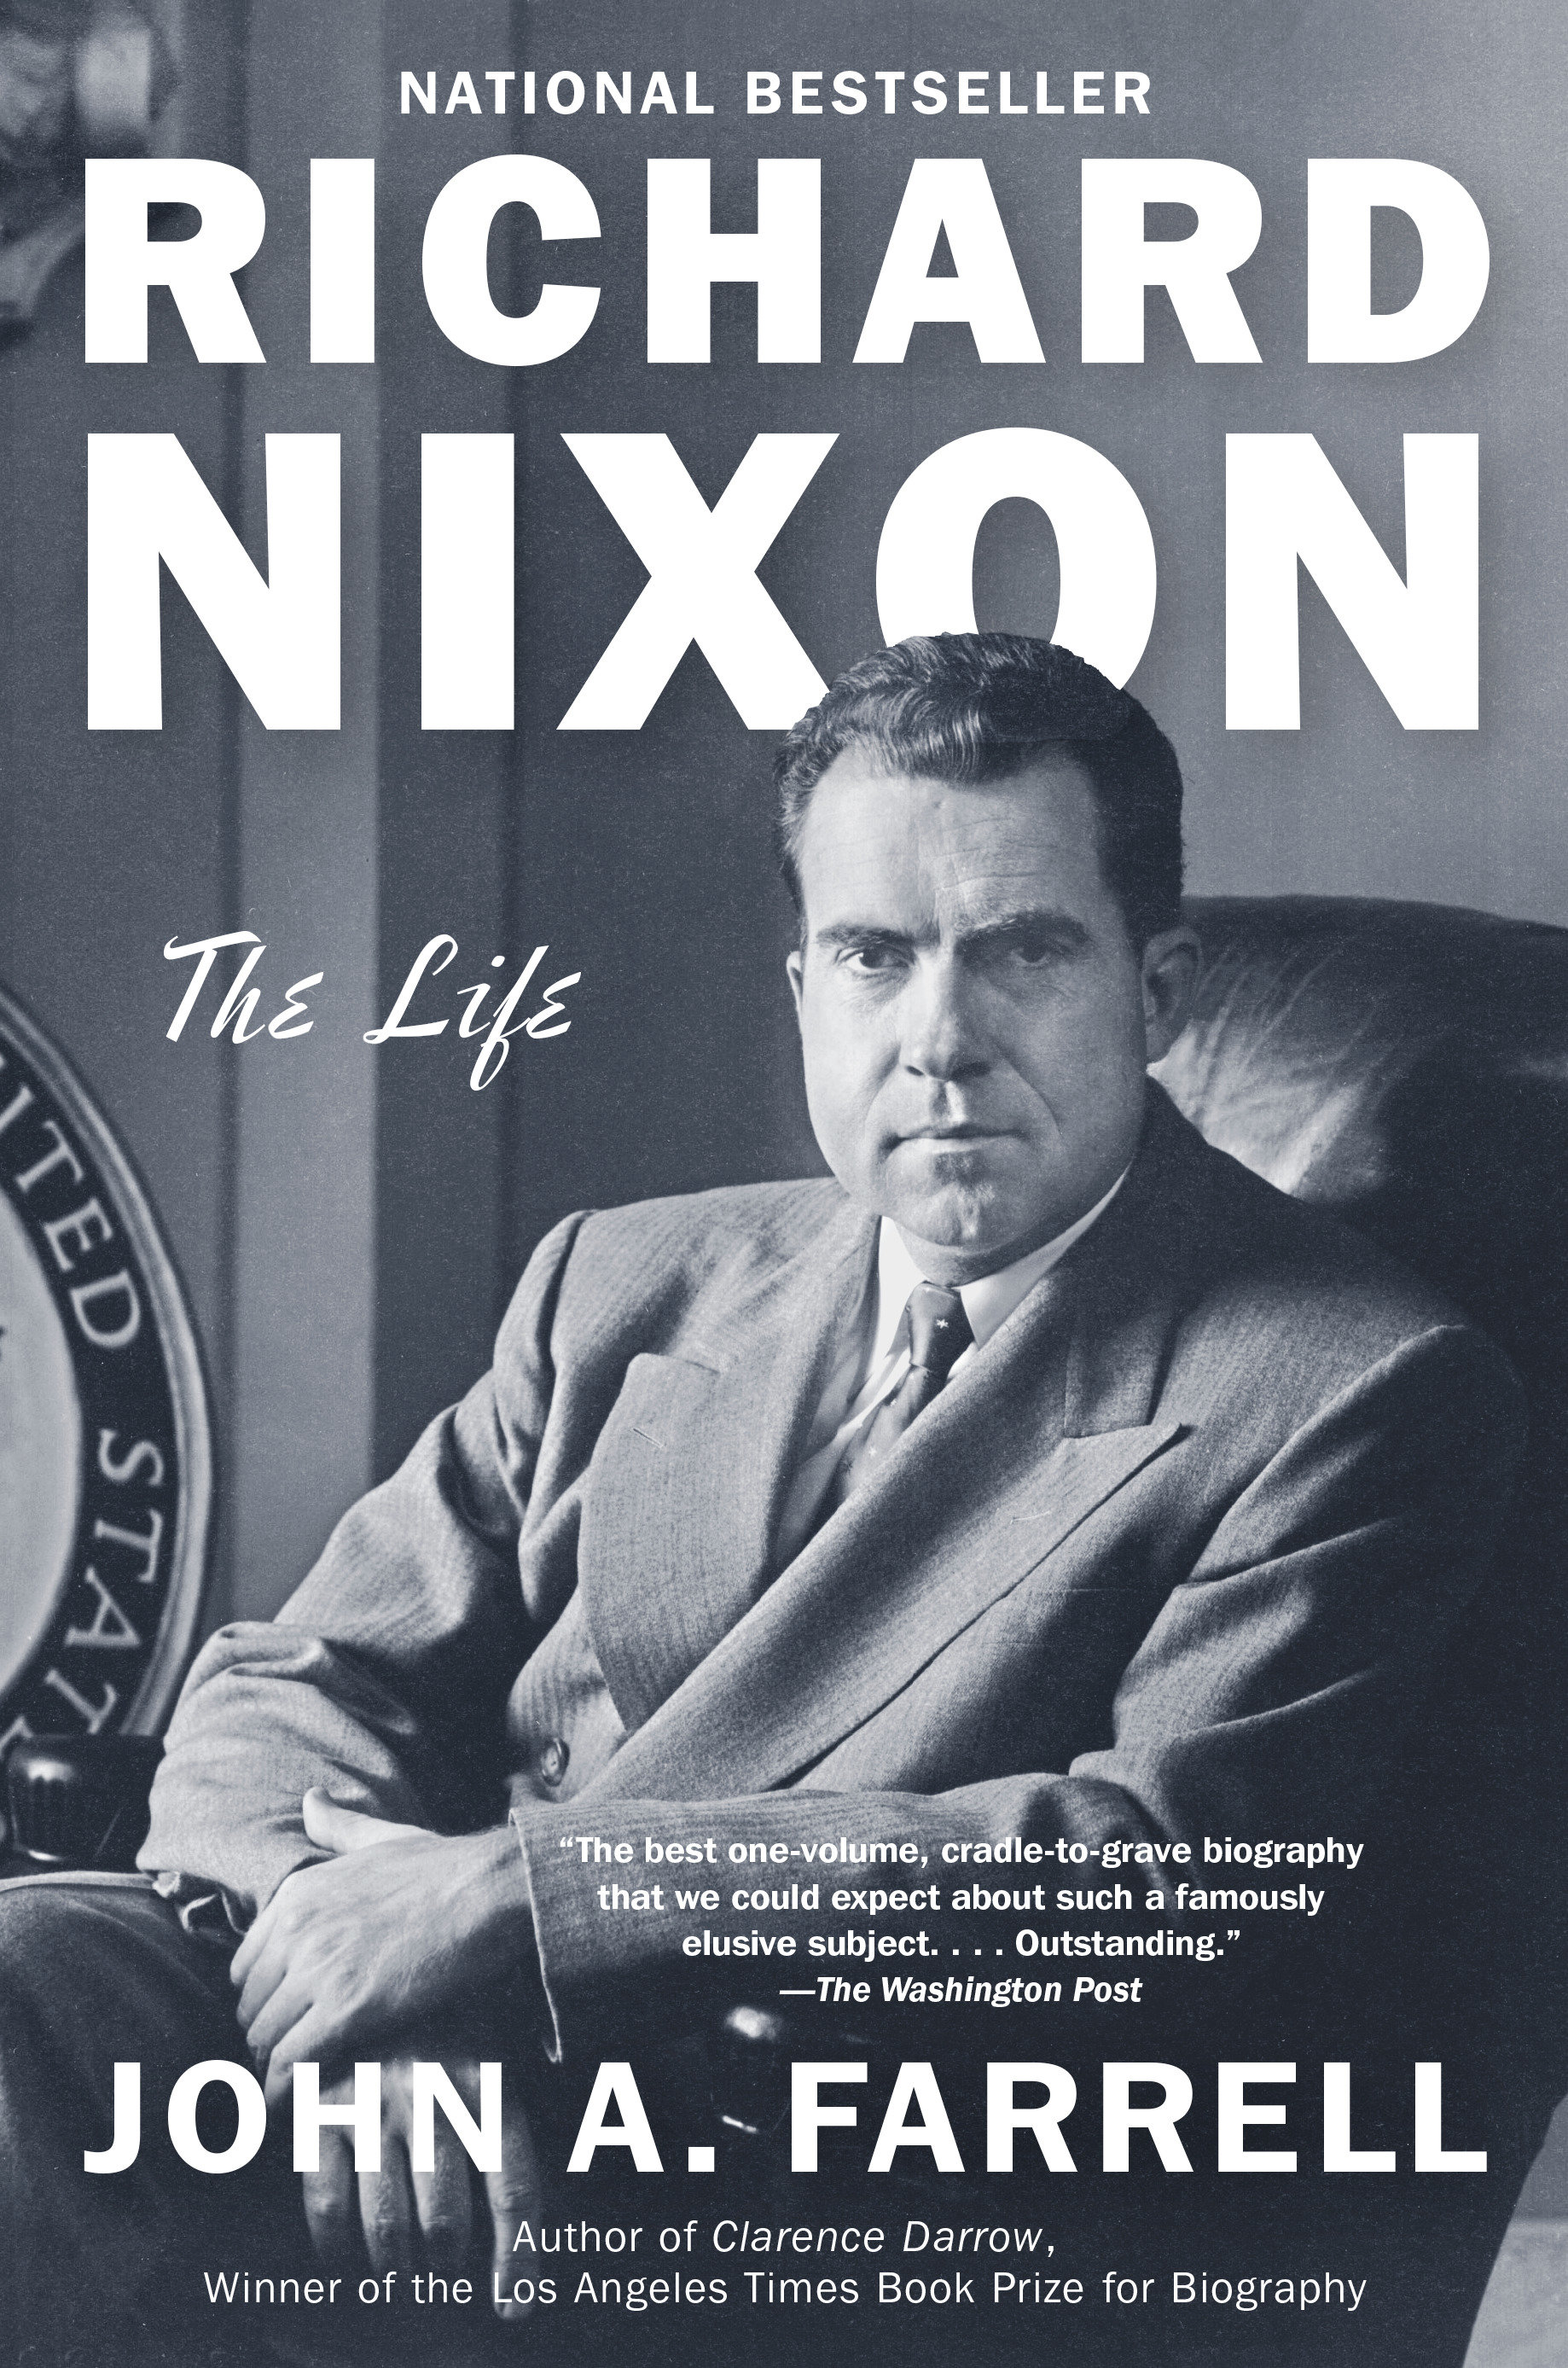 Richard Nixon the life cover image